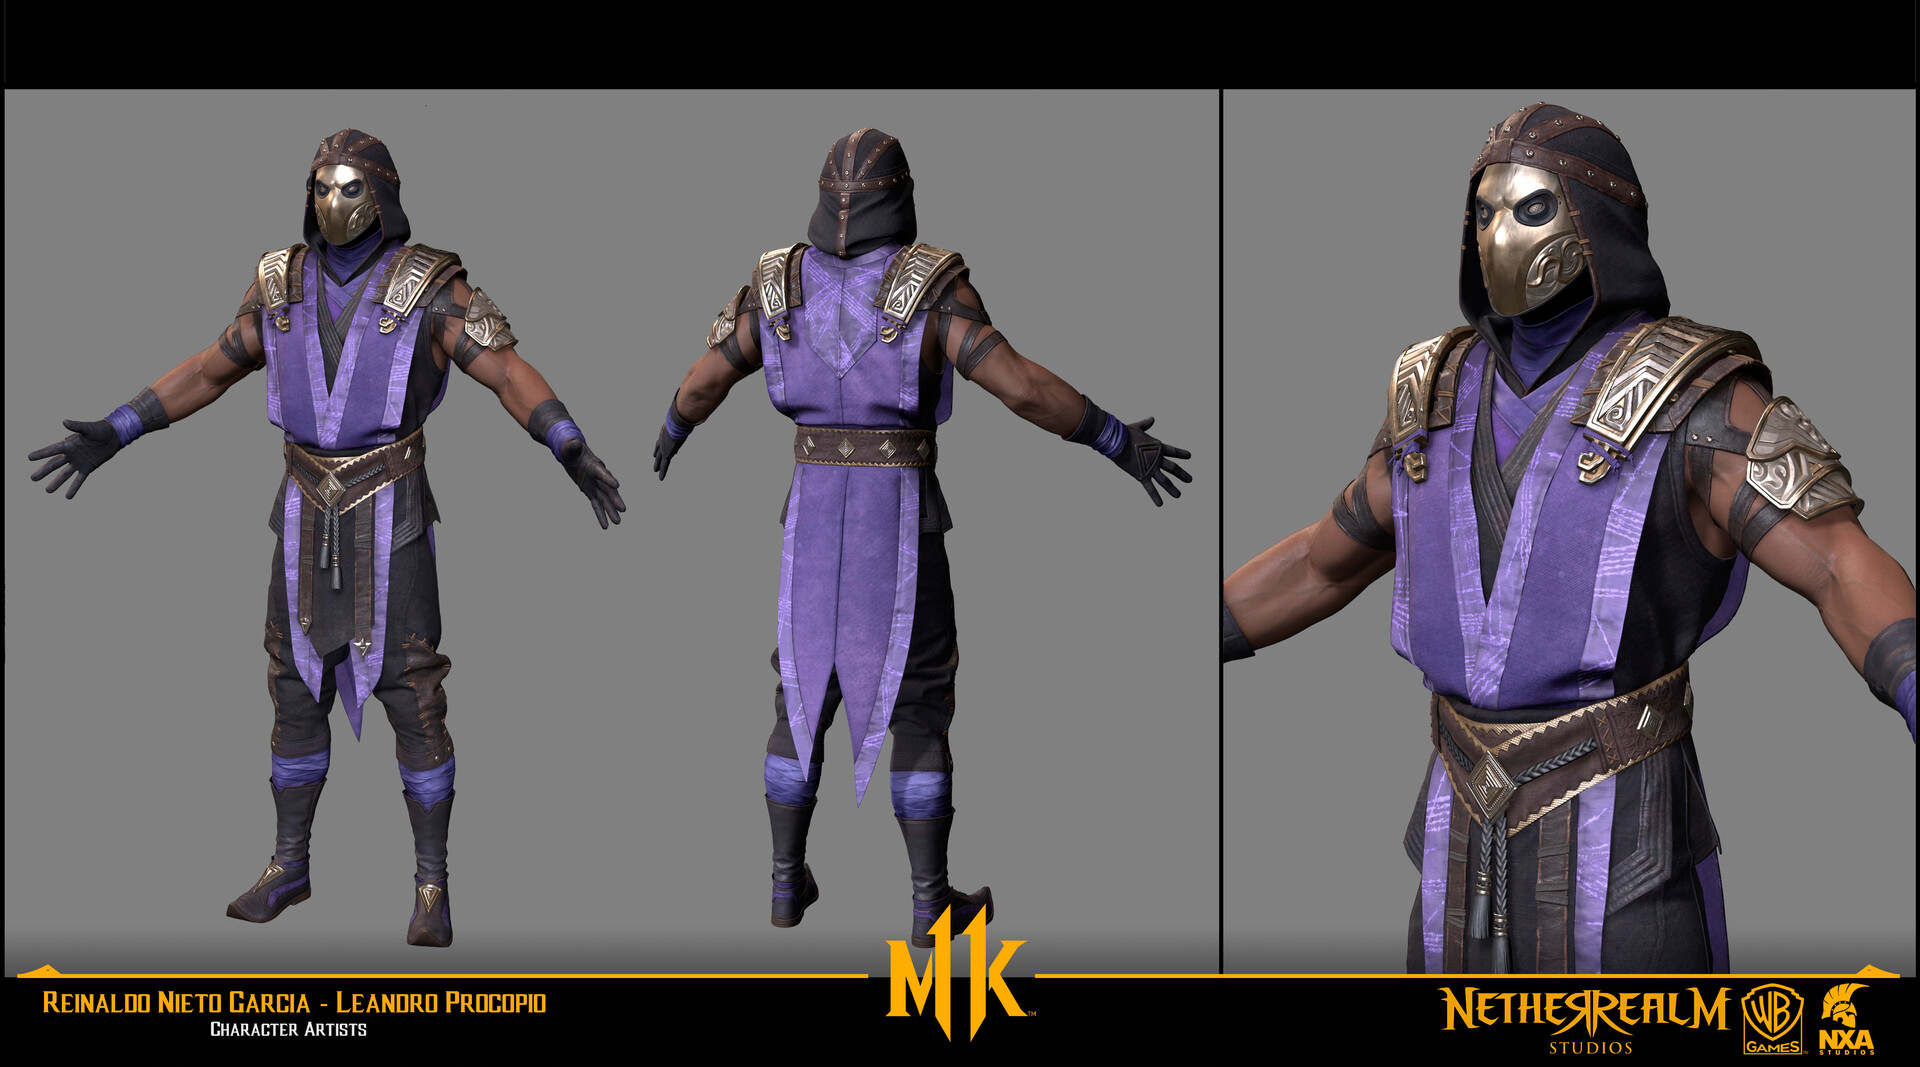 Mortal Kombat Characters Rain